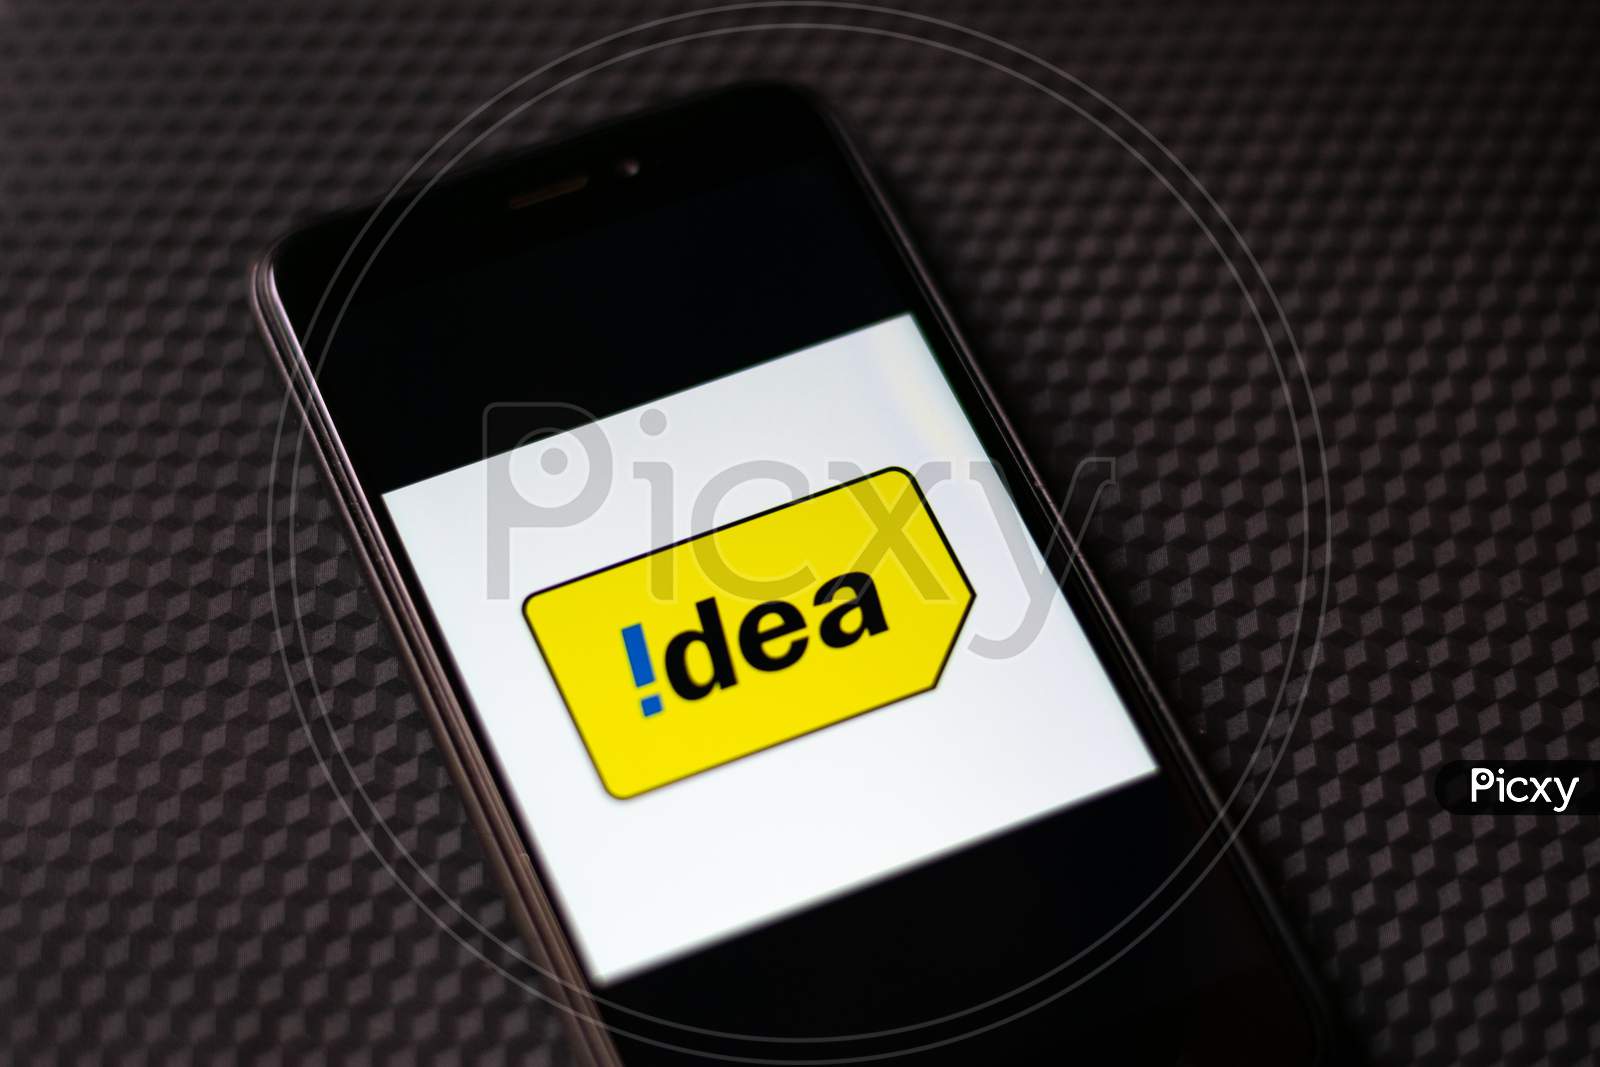 Idea cellular network mobile application